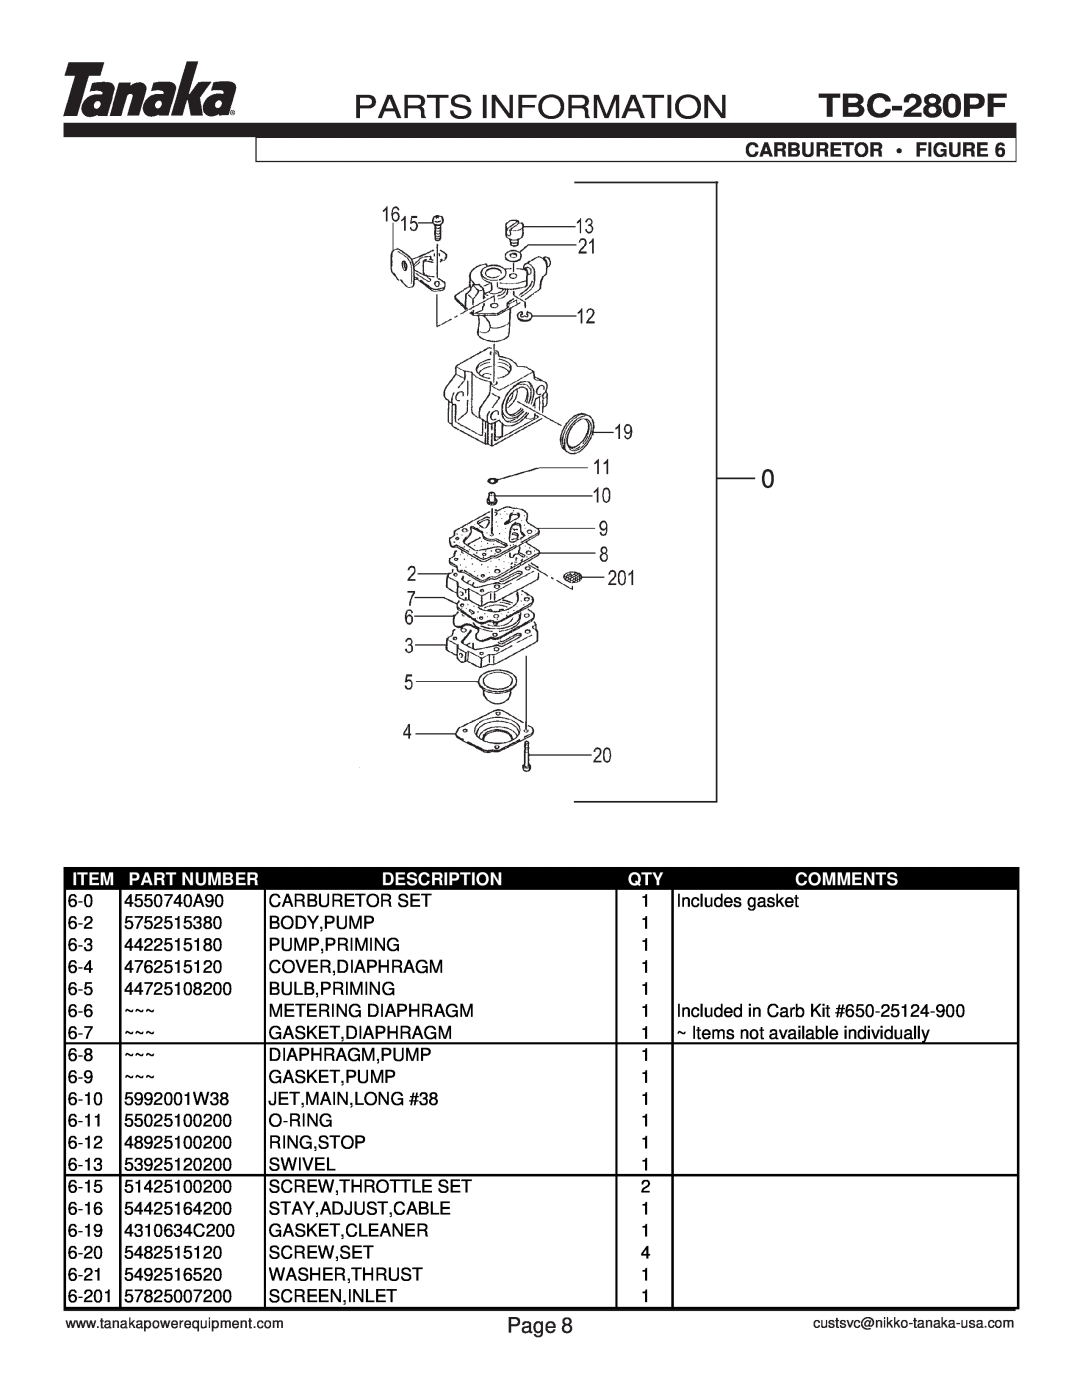 Tanaka TBC-280PF manual Carburetor Figure, Parts Information, Page, Part Number, Description, Comments 